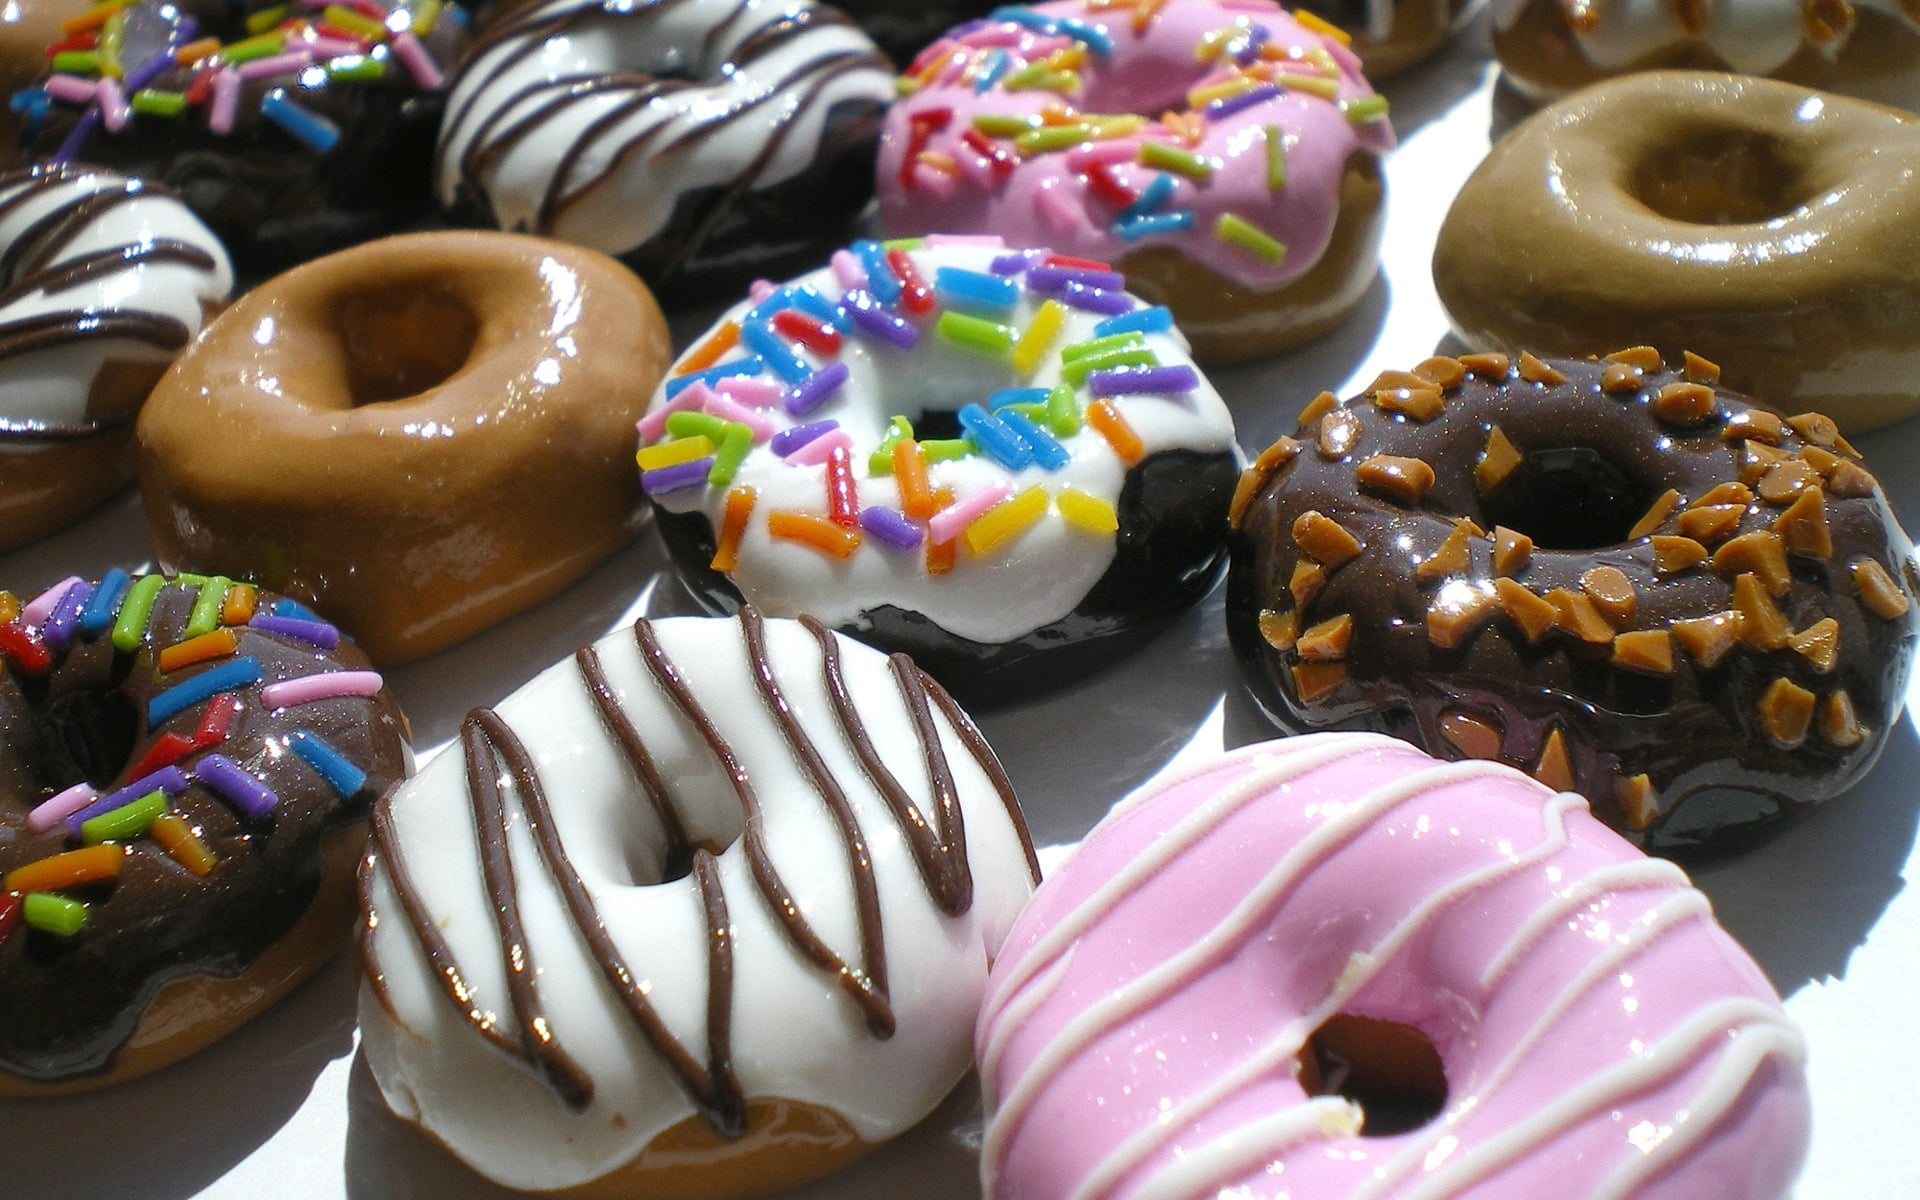 doughnut lot, donuts, sweet, glaze, chocolate, dessert, sweet Food